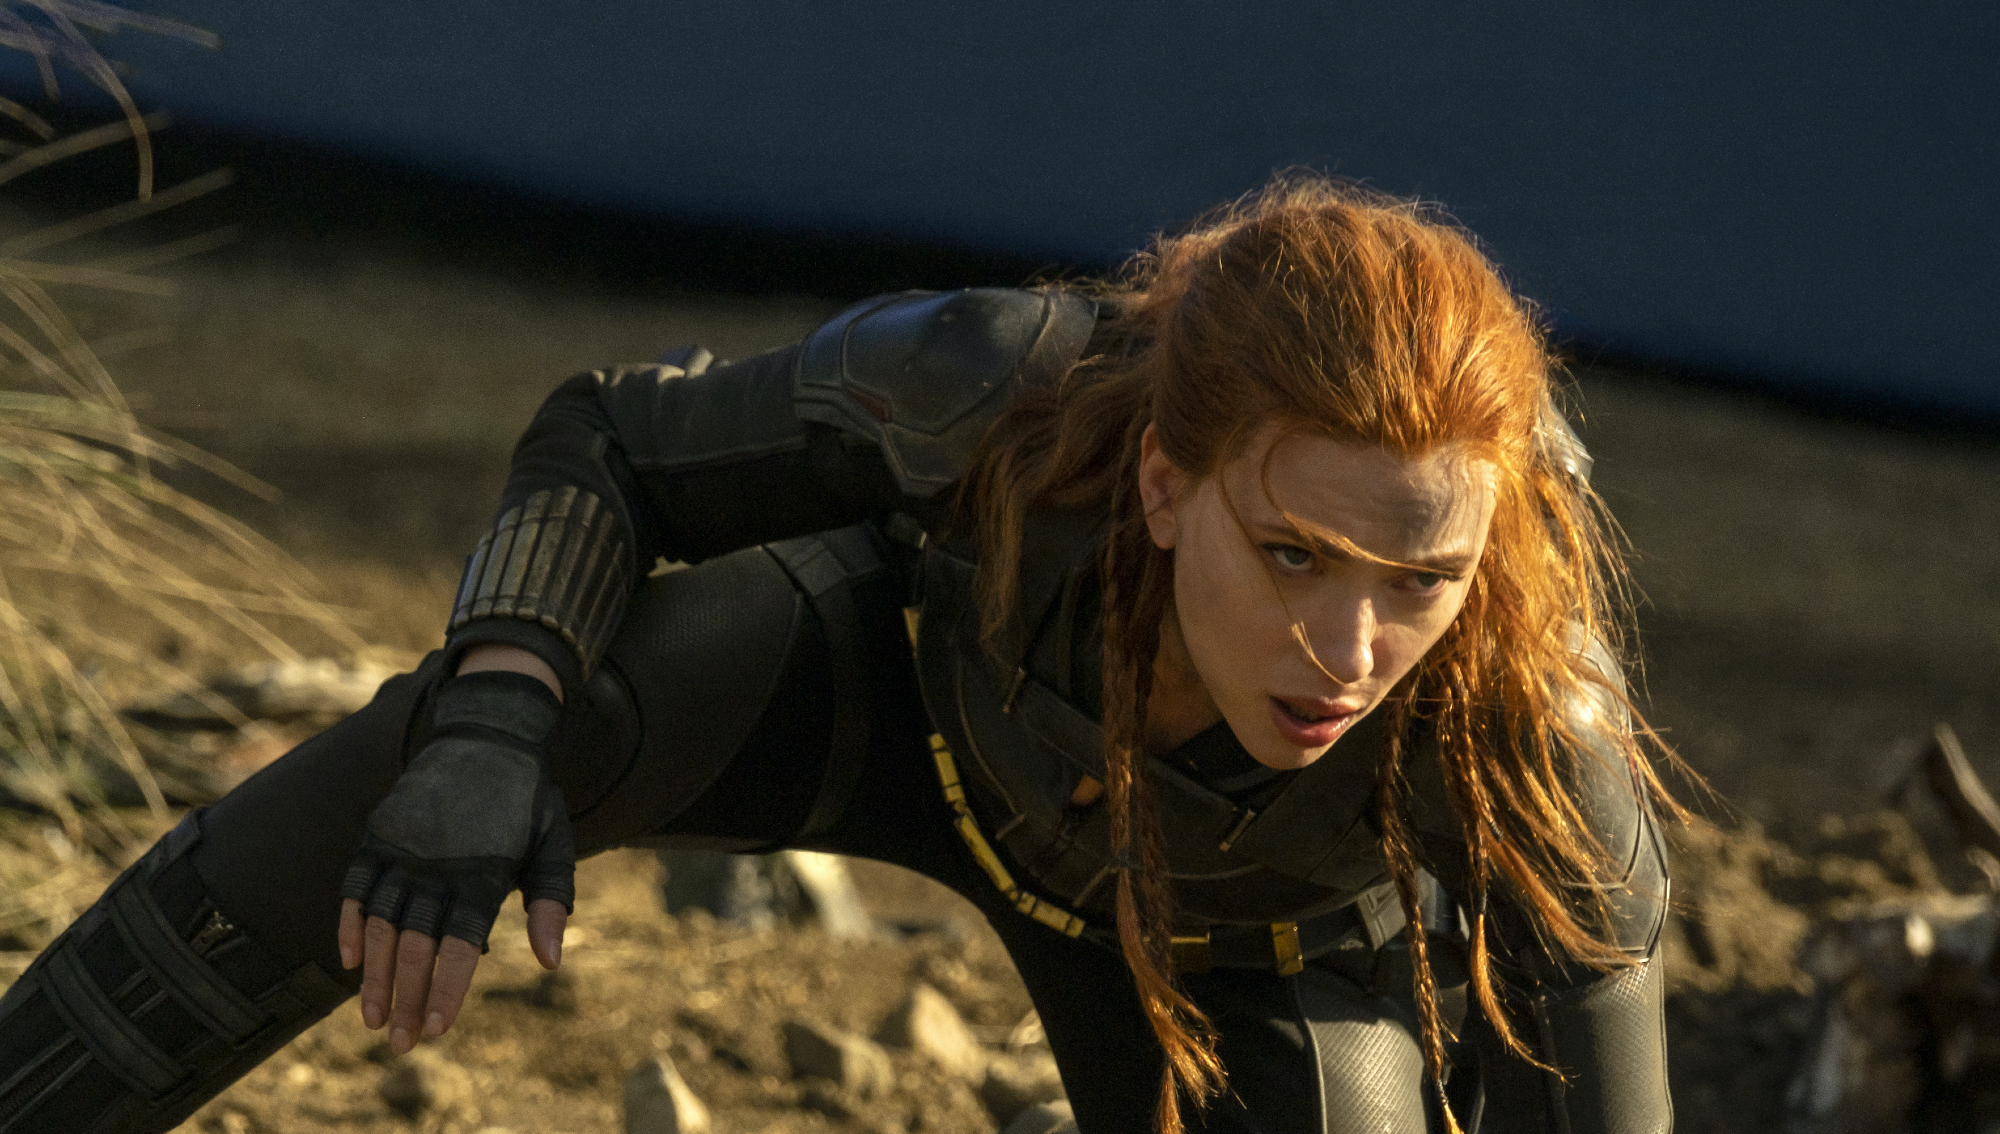 'Black Widow' star Scarlett Johansson crouching in a superhero pose wearing black costume